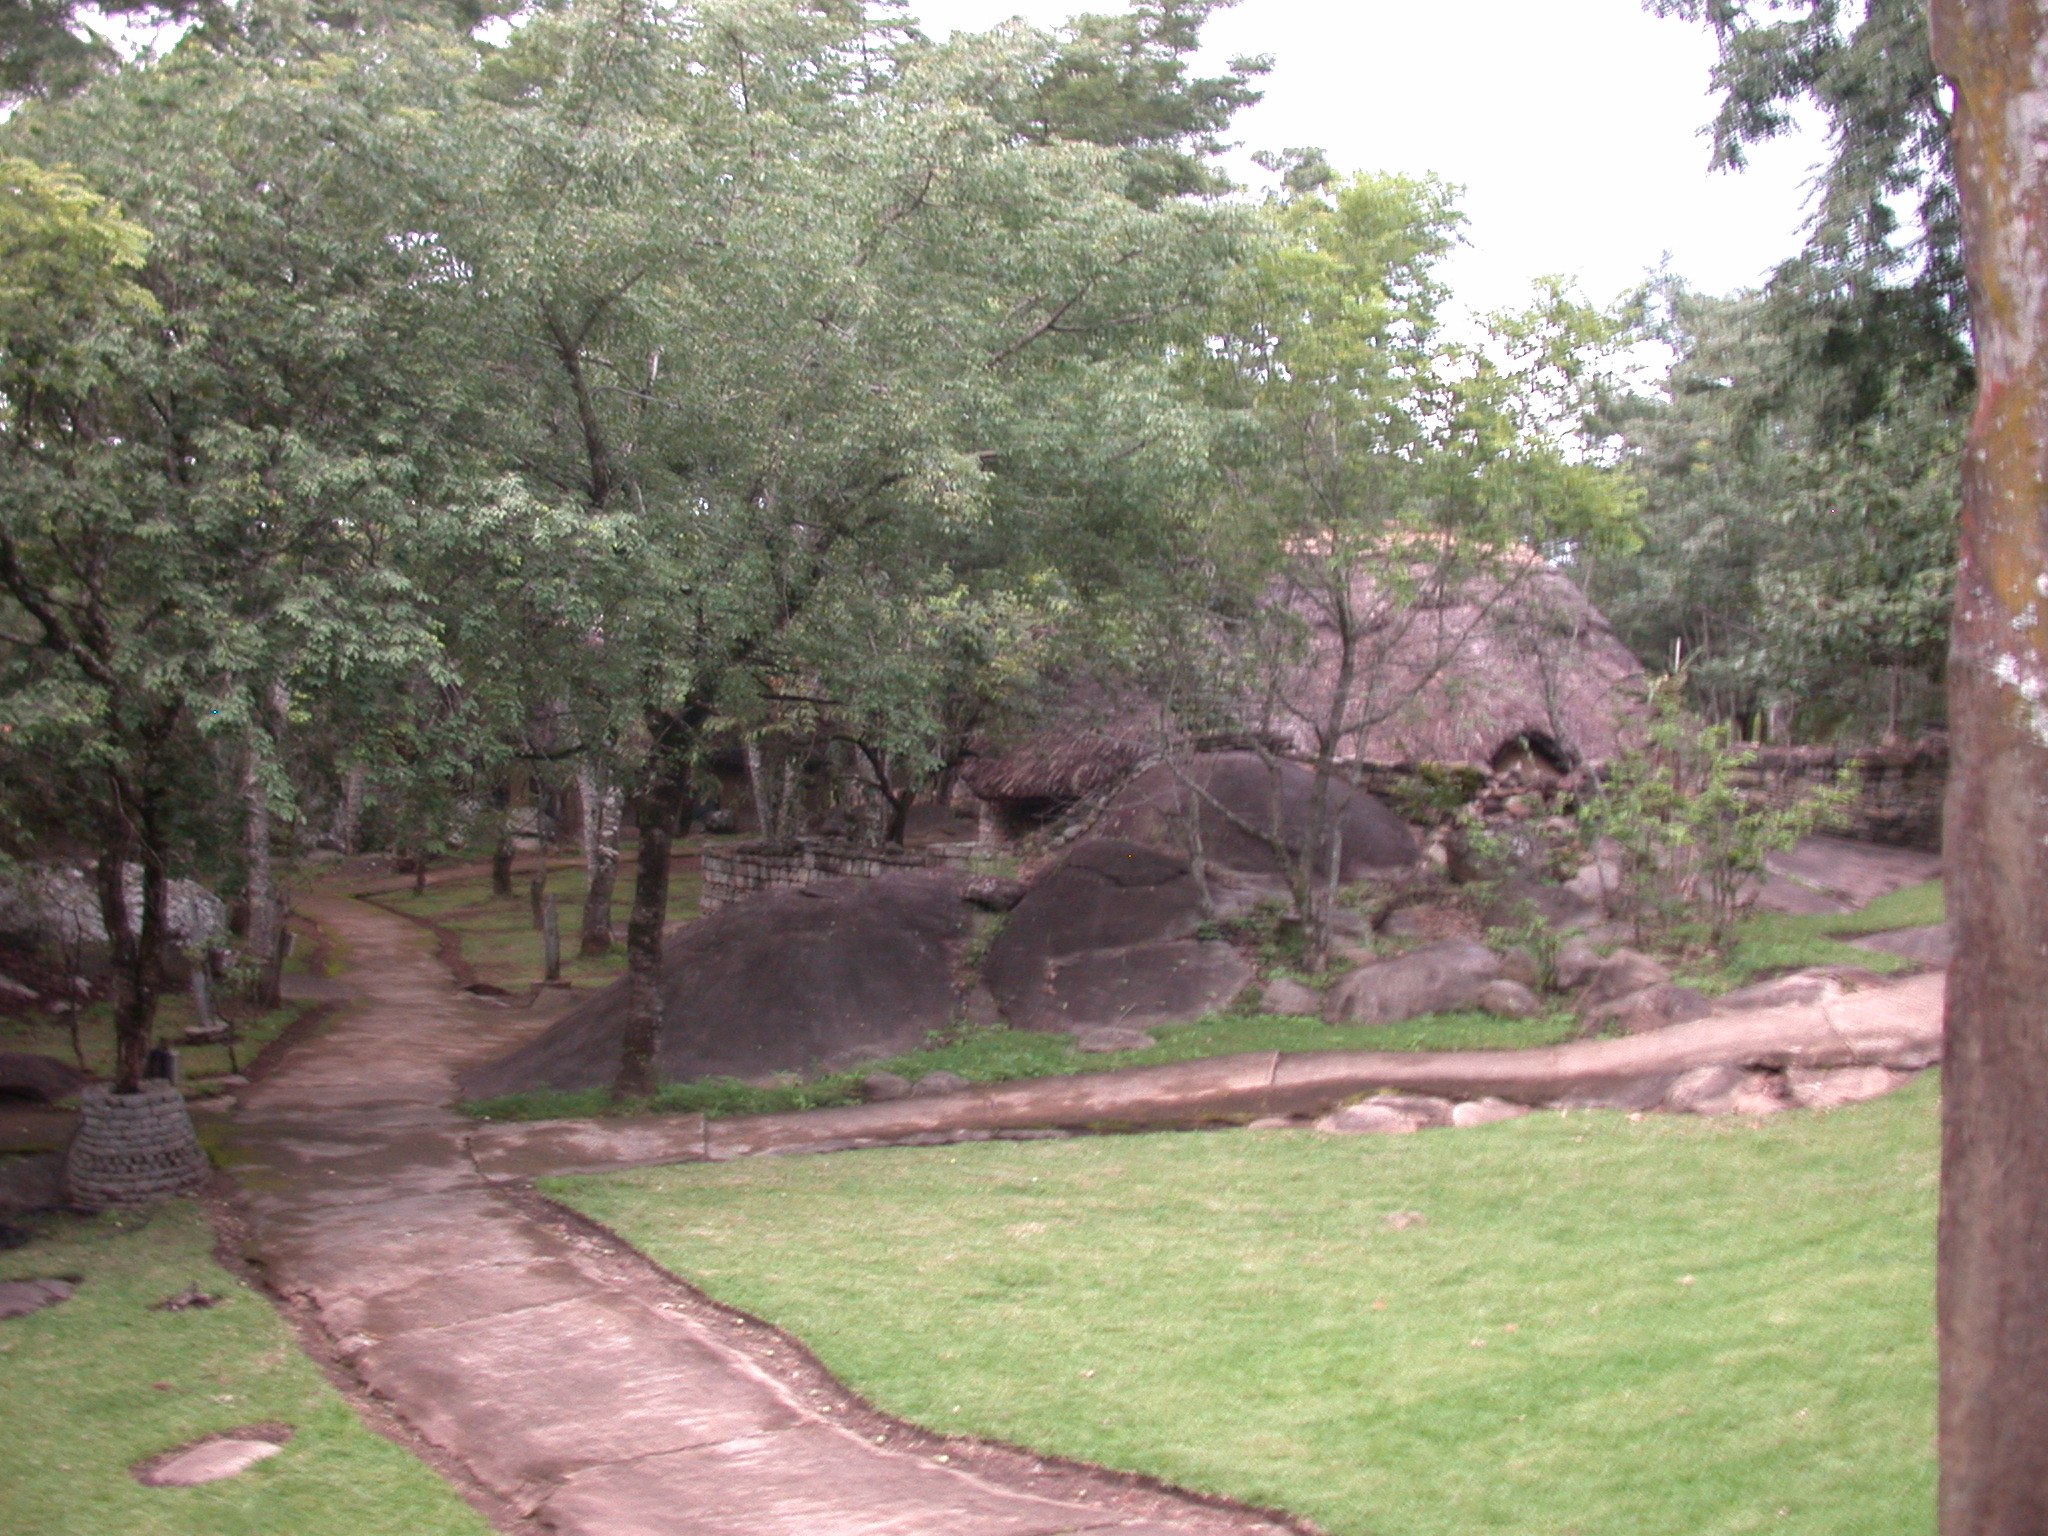 Grounds of the Ancient City Lodge, Great Zimbabwe, Outside Masvingo, Zimbabwe